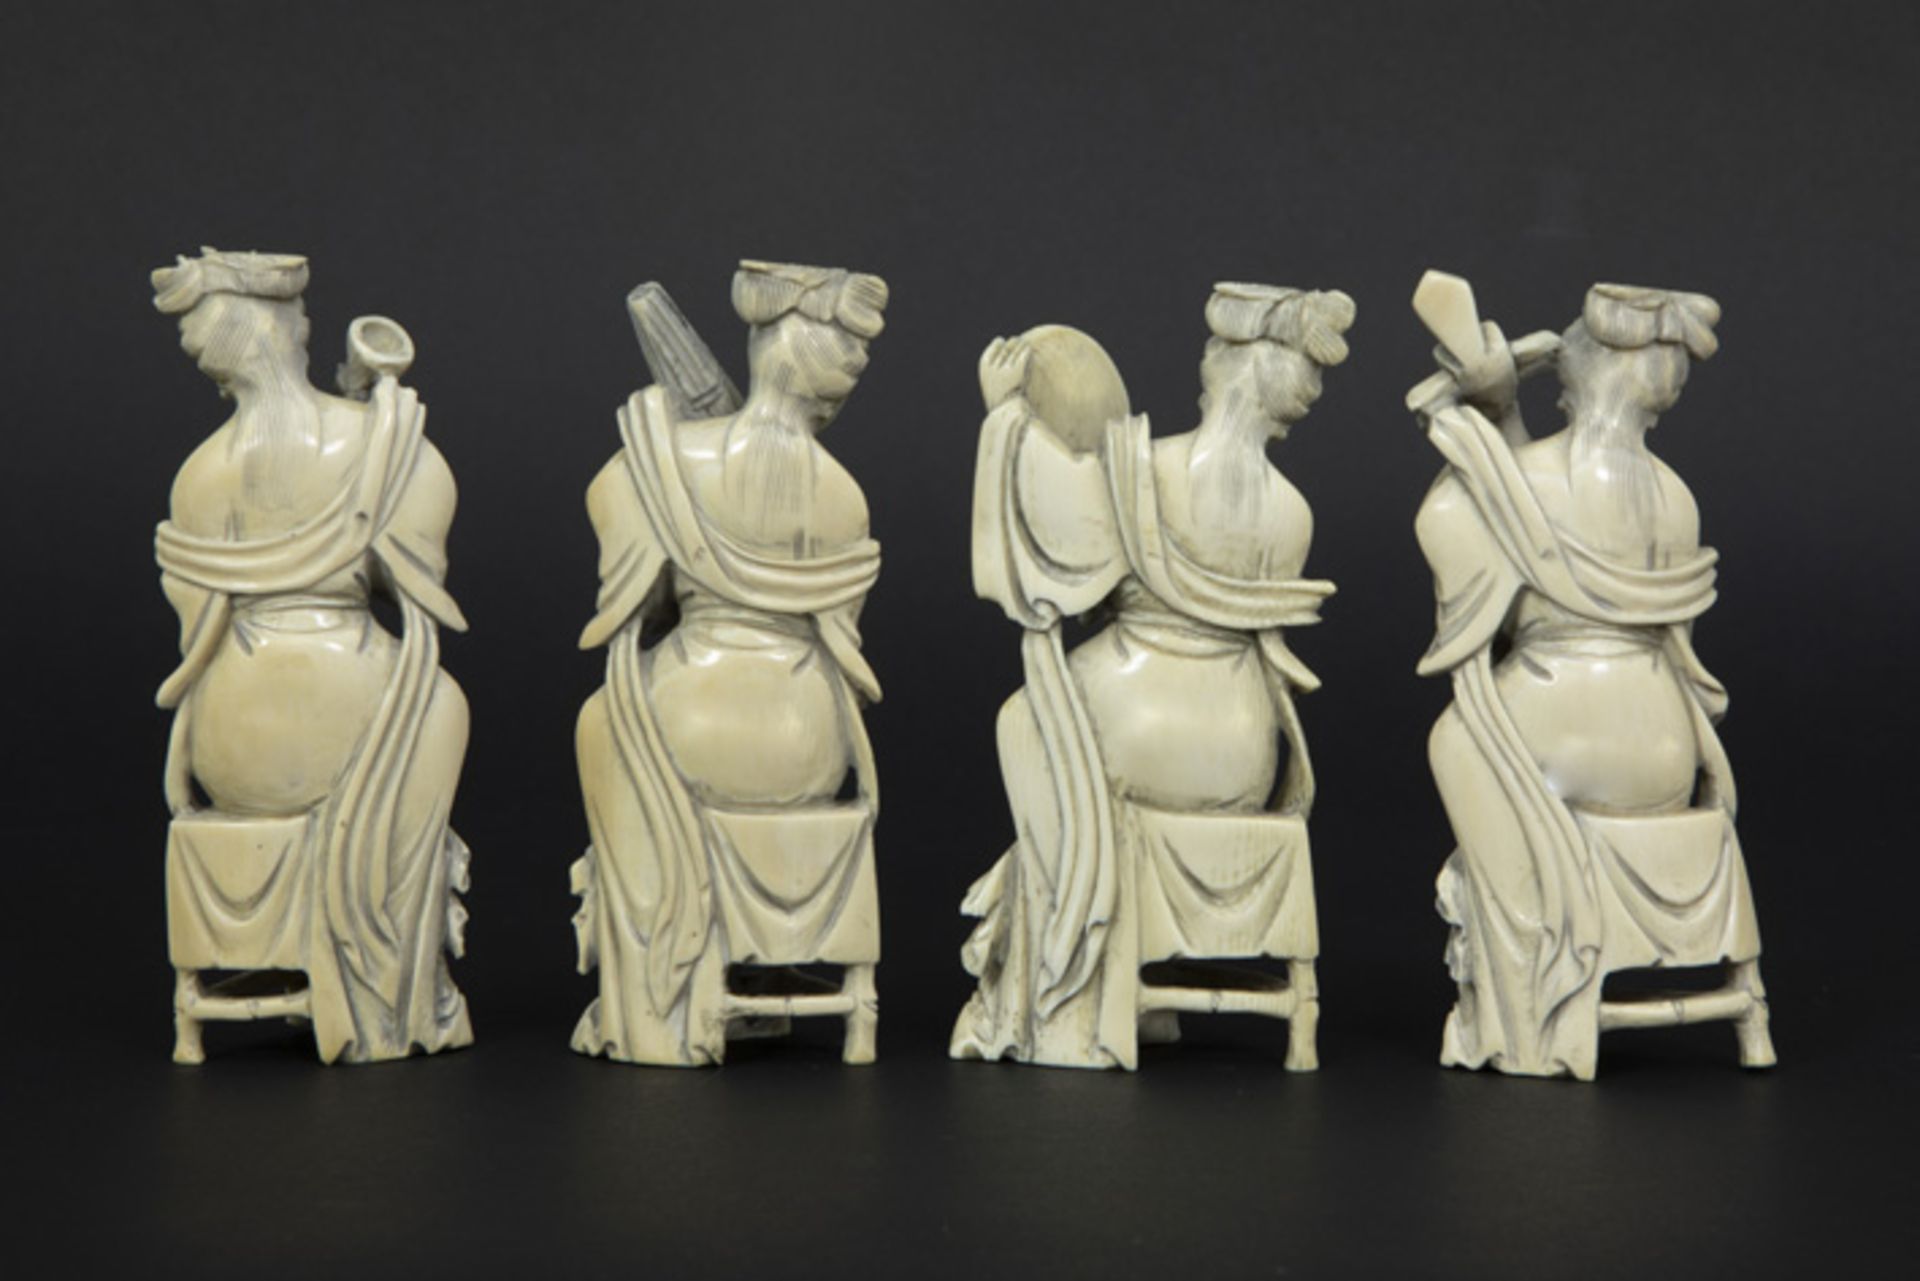 set of four small Chinese sculptures in ivory || Reeks van vier kleine Chinese sculpturen in ivoor : - Image 2 of 2